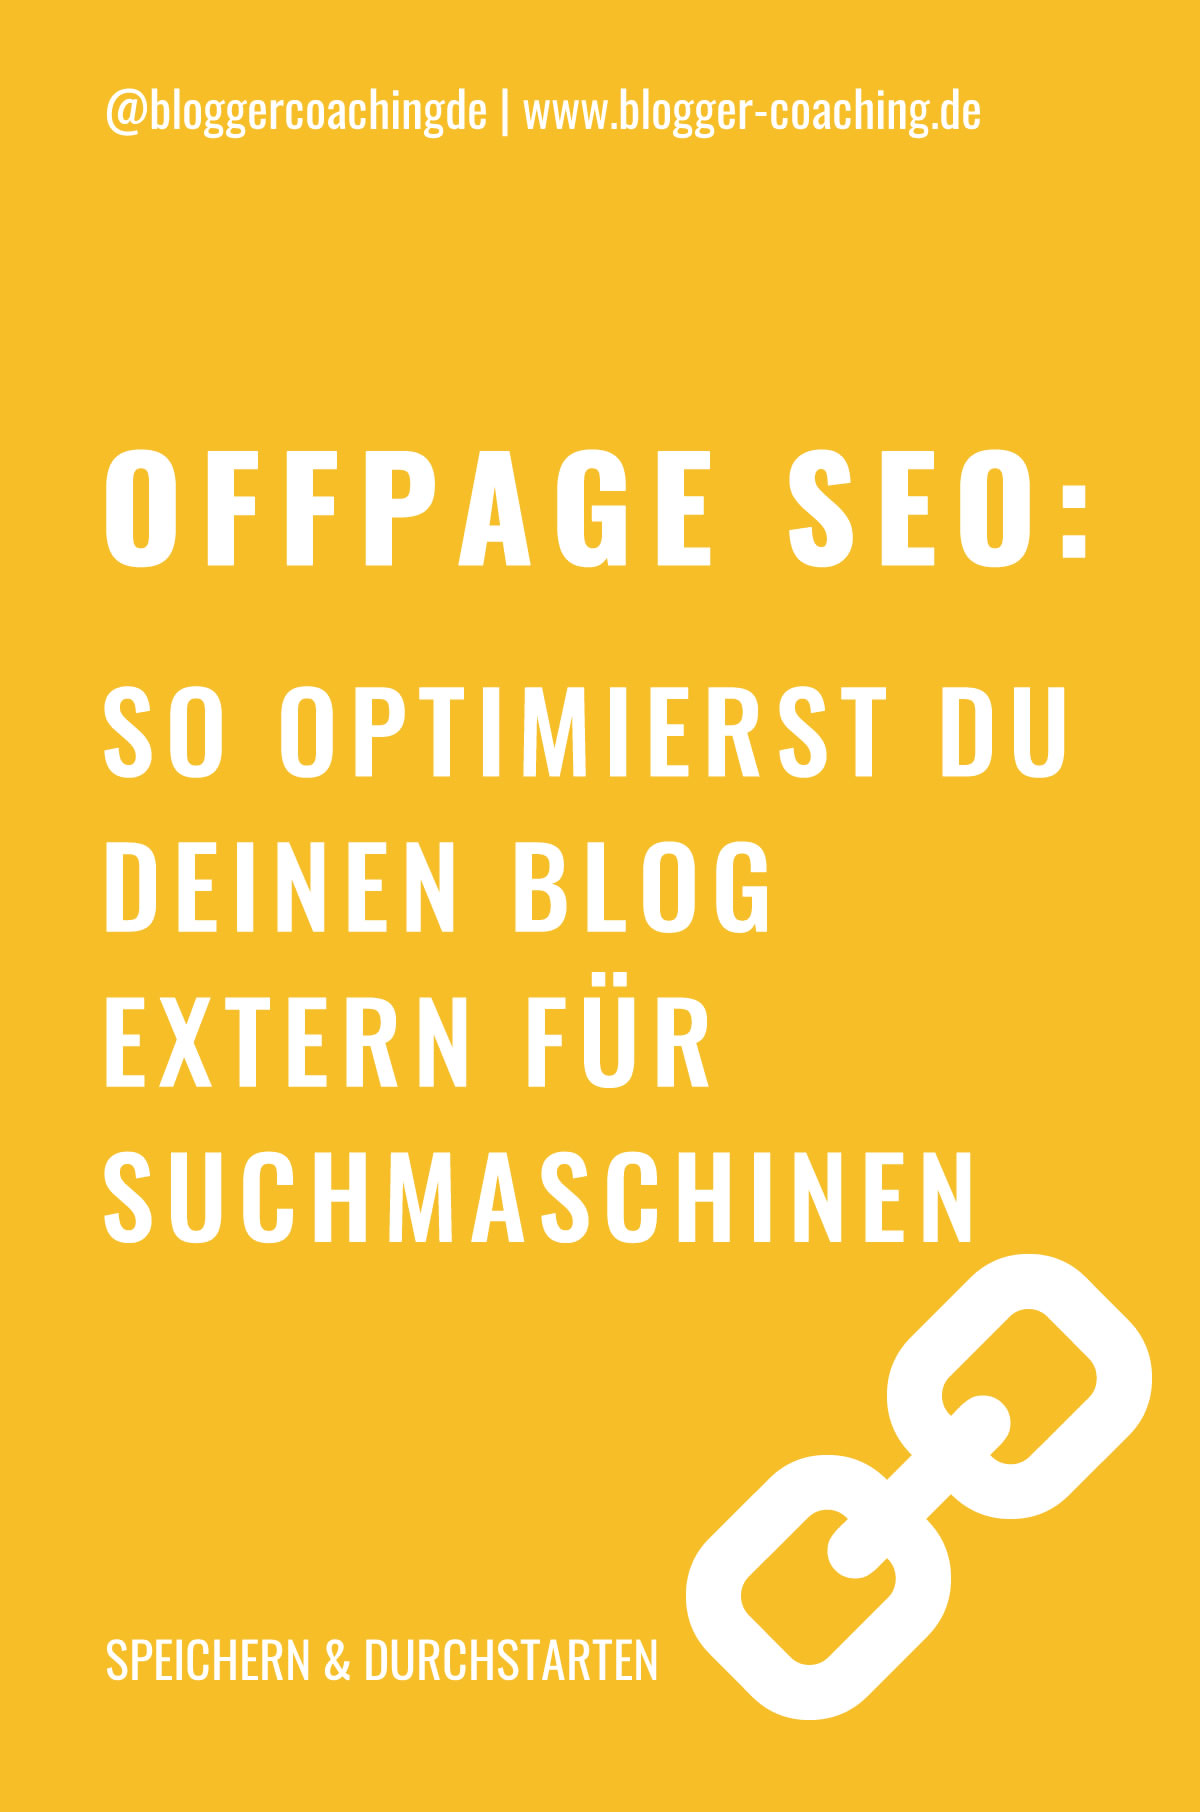 Off-Page SEO für Blogger - Der ultimative Guide | Blogger-Coaching.de - Tipps & Kurse für Blogger